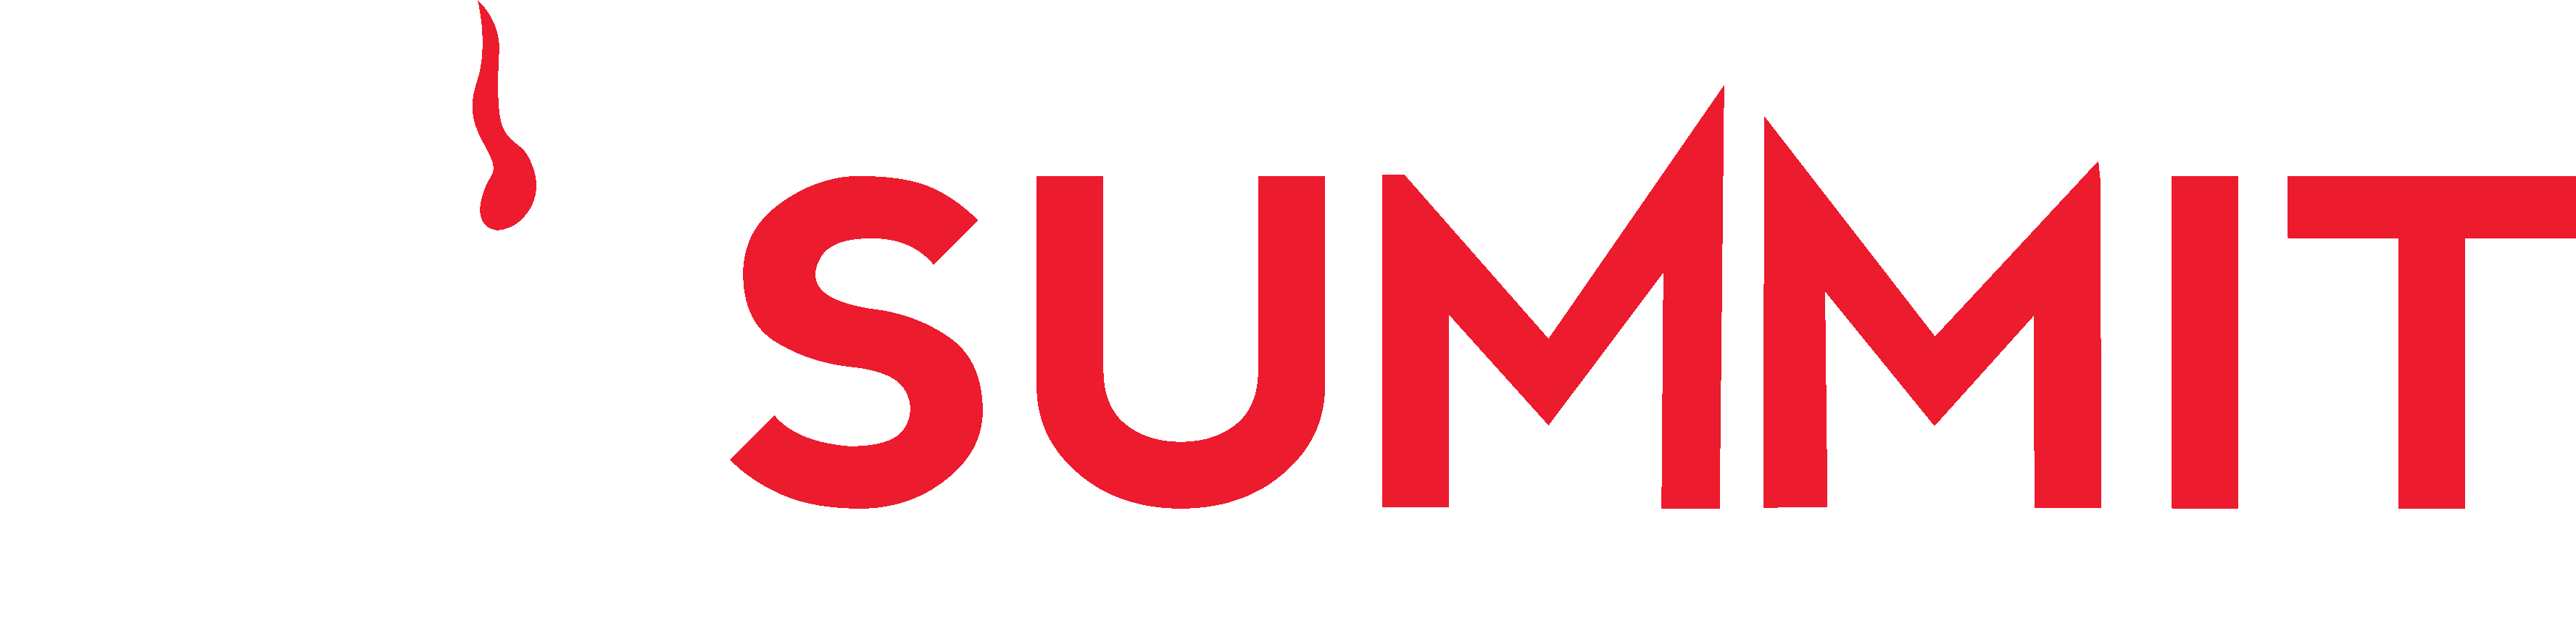 The CFI Summit - An International Congress in the Pacific Northwest